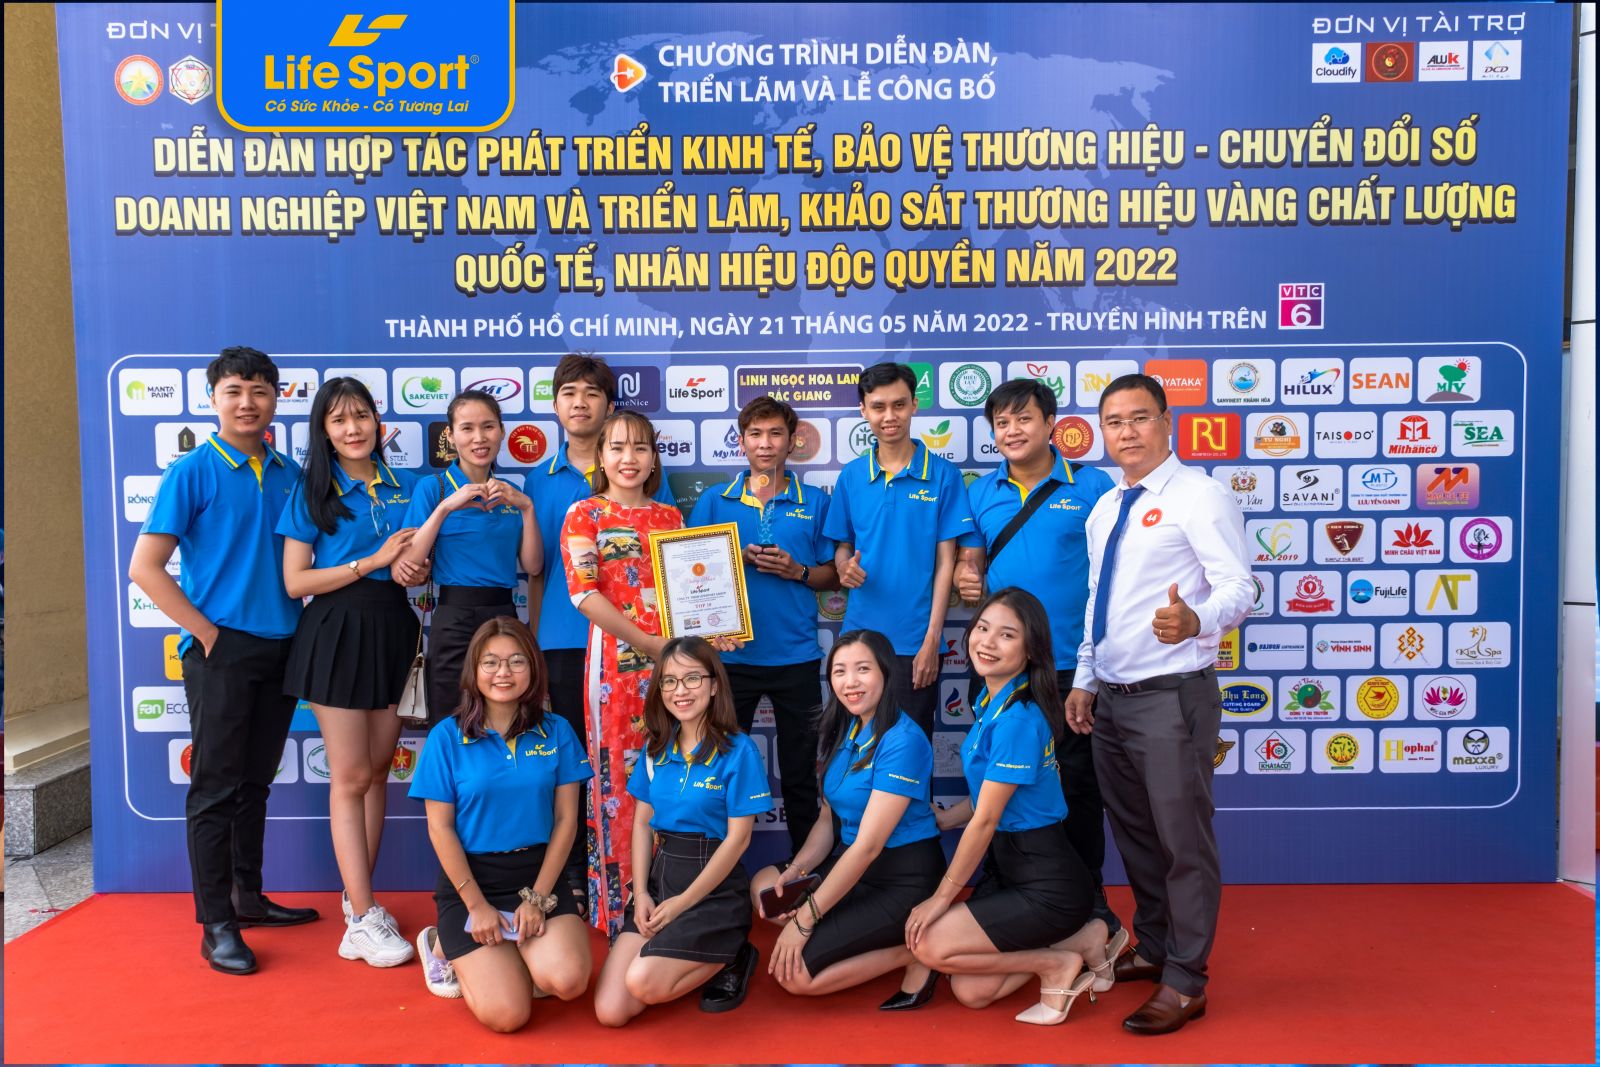 lifesport top 10 thuong hieu vang chat luong quoc te 2022 2